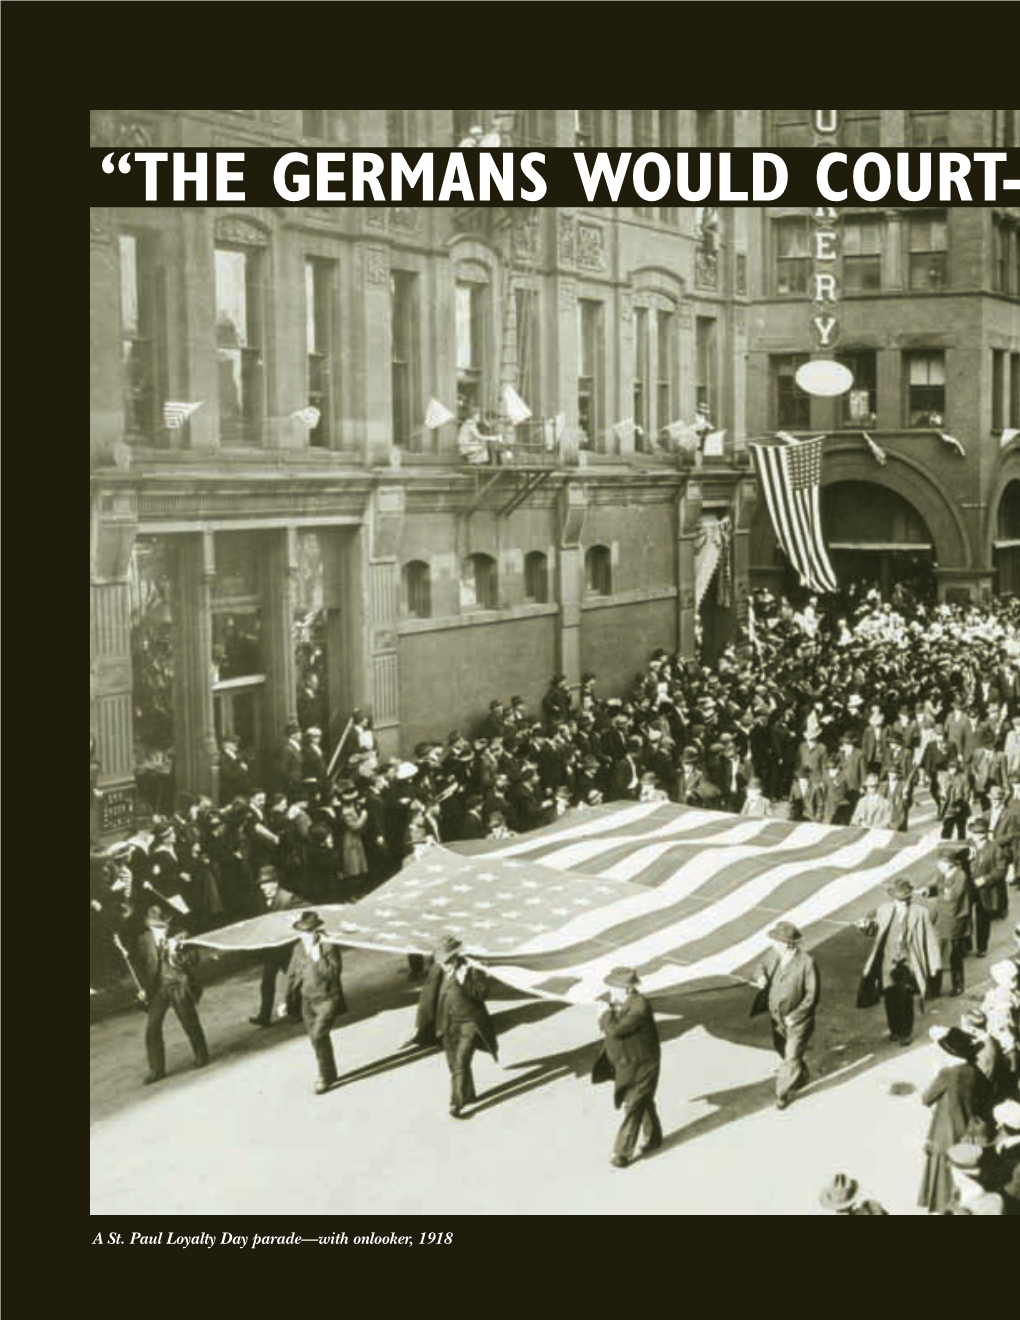 St. Paul's World War I Socialist Draft Resisters / William R. Douglas